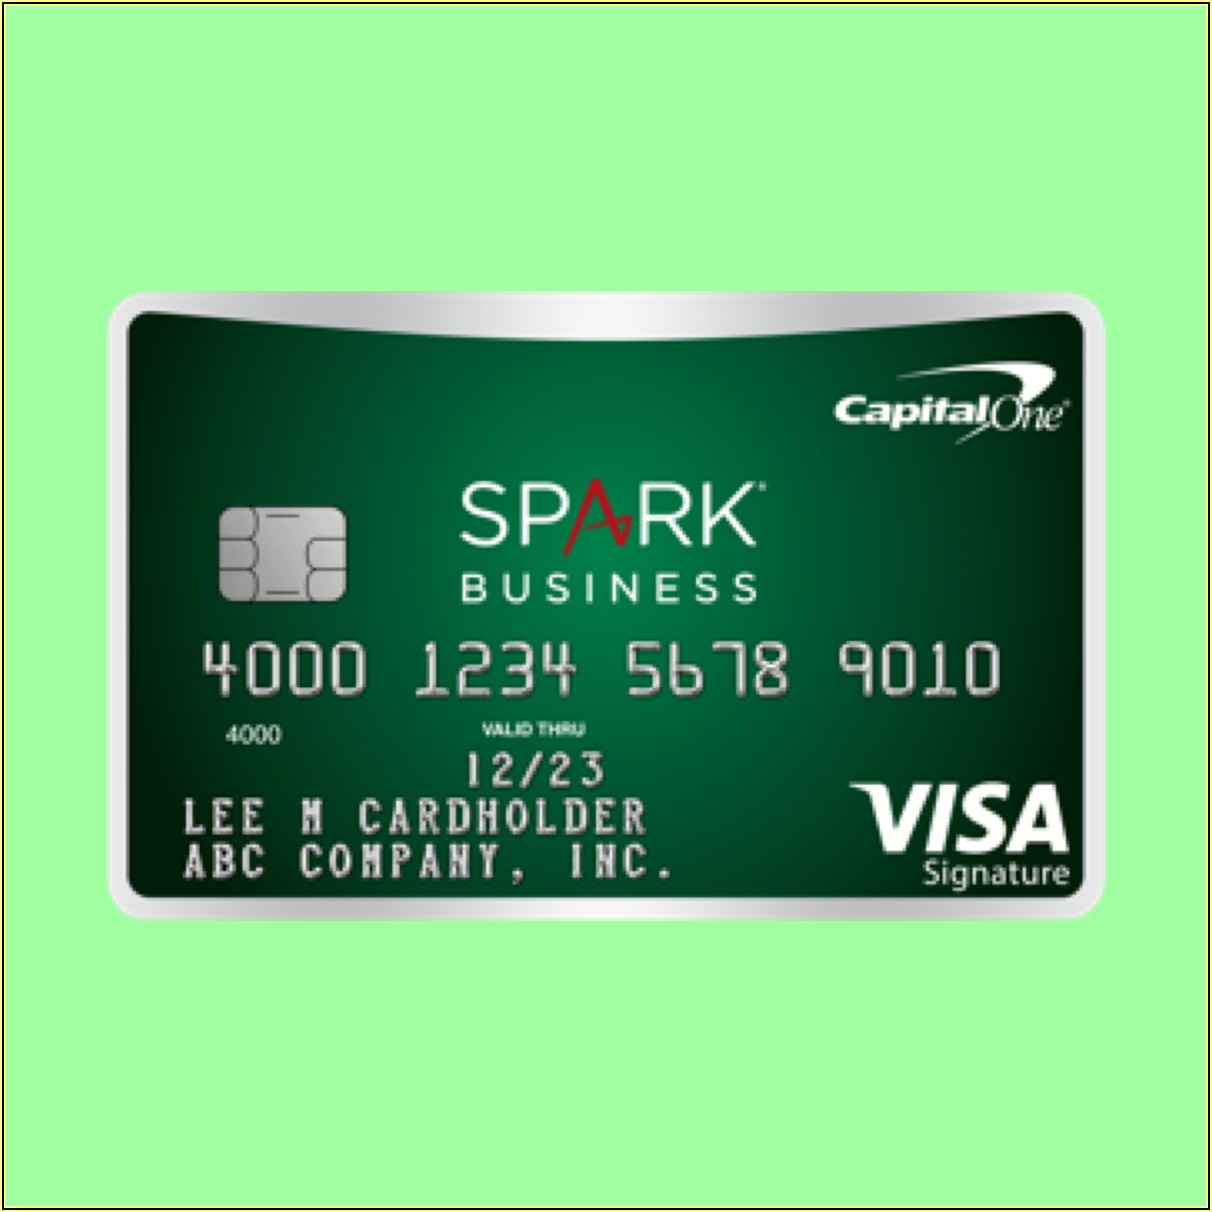 Capital One Visa Signature Business Card